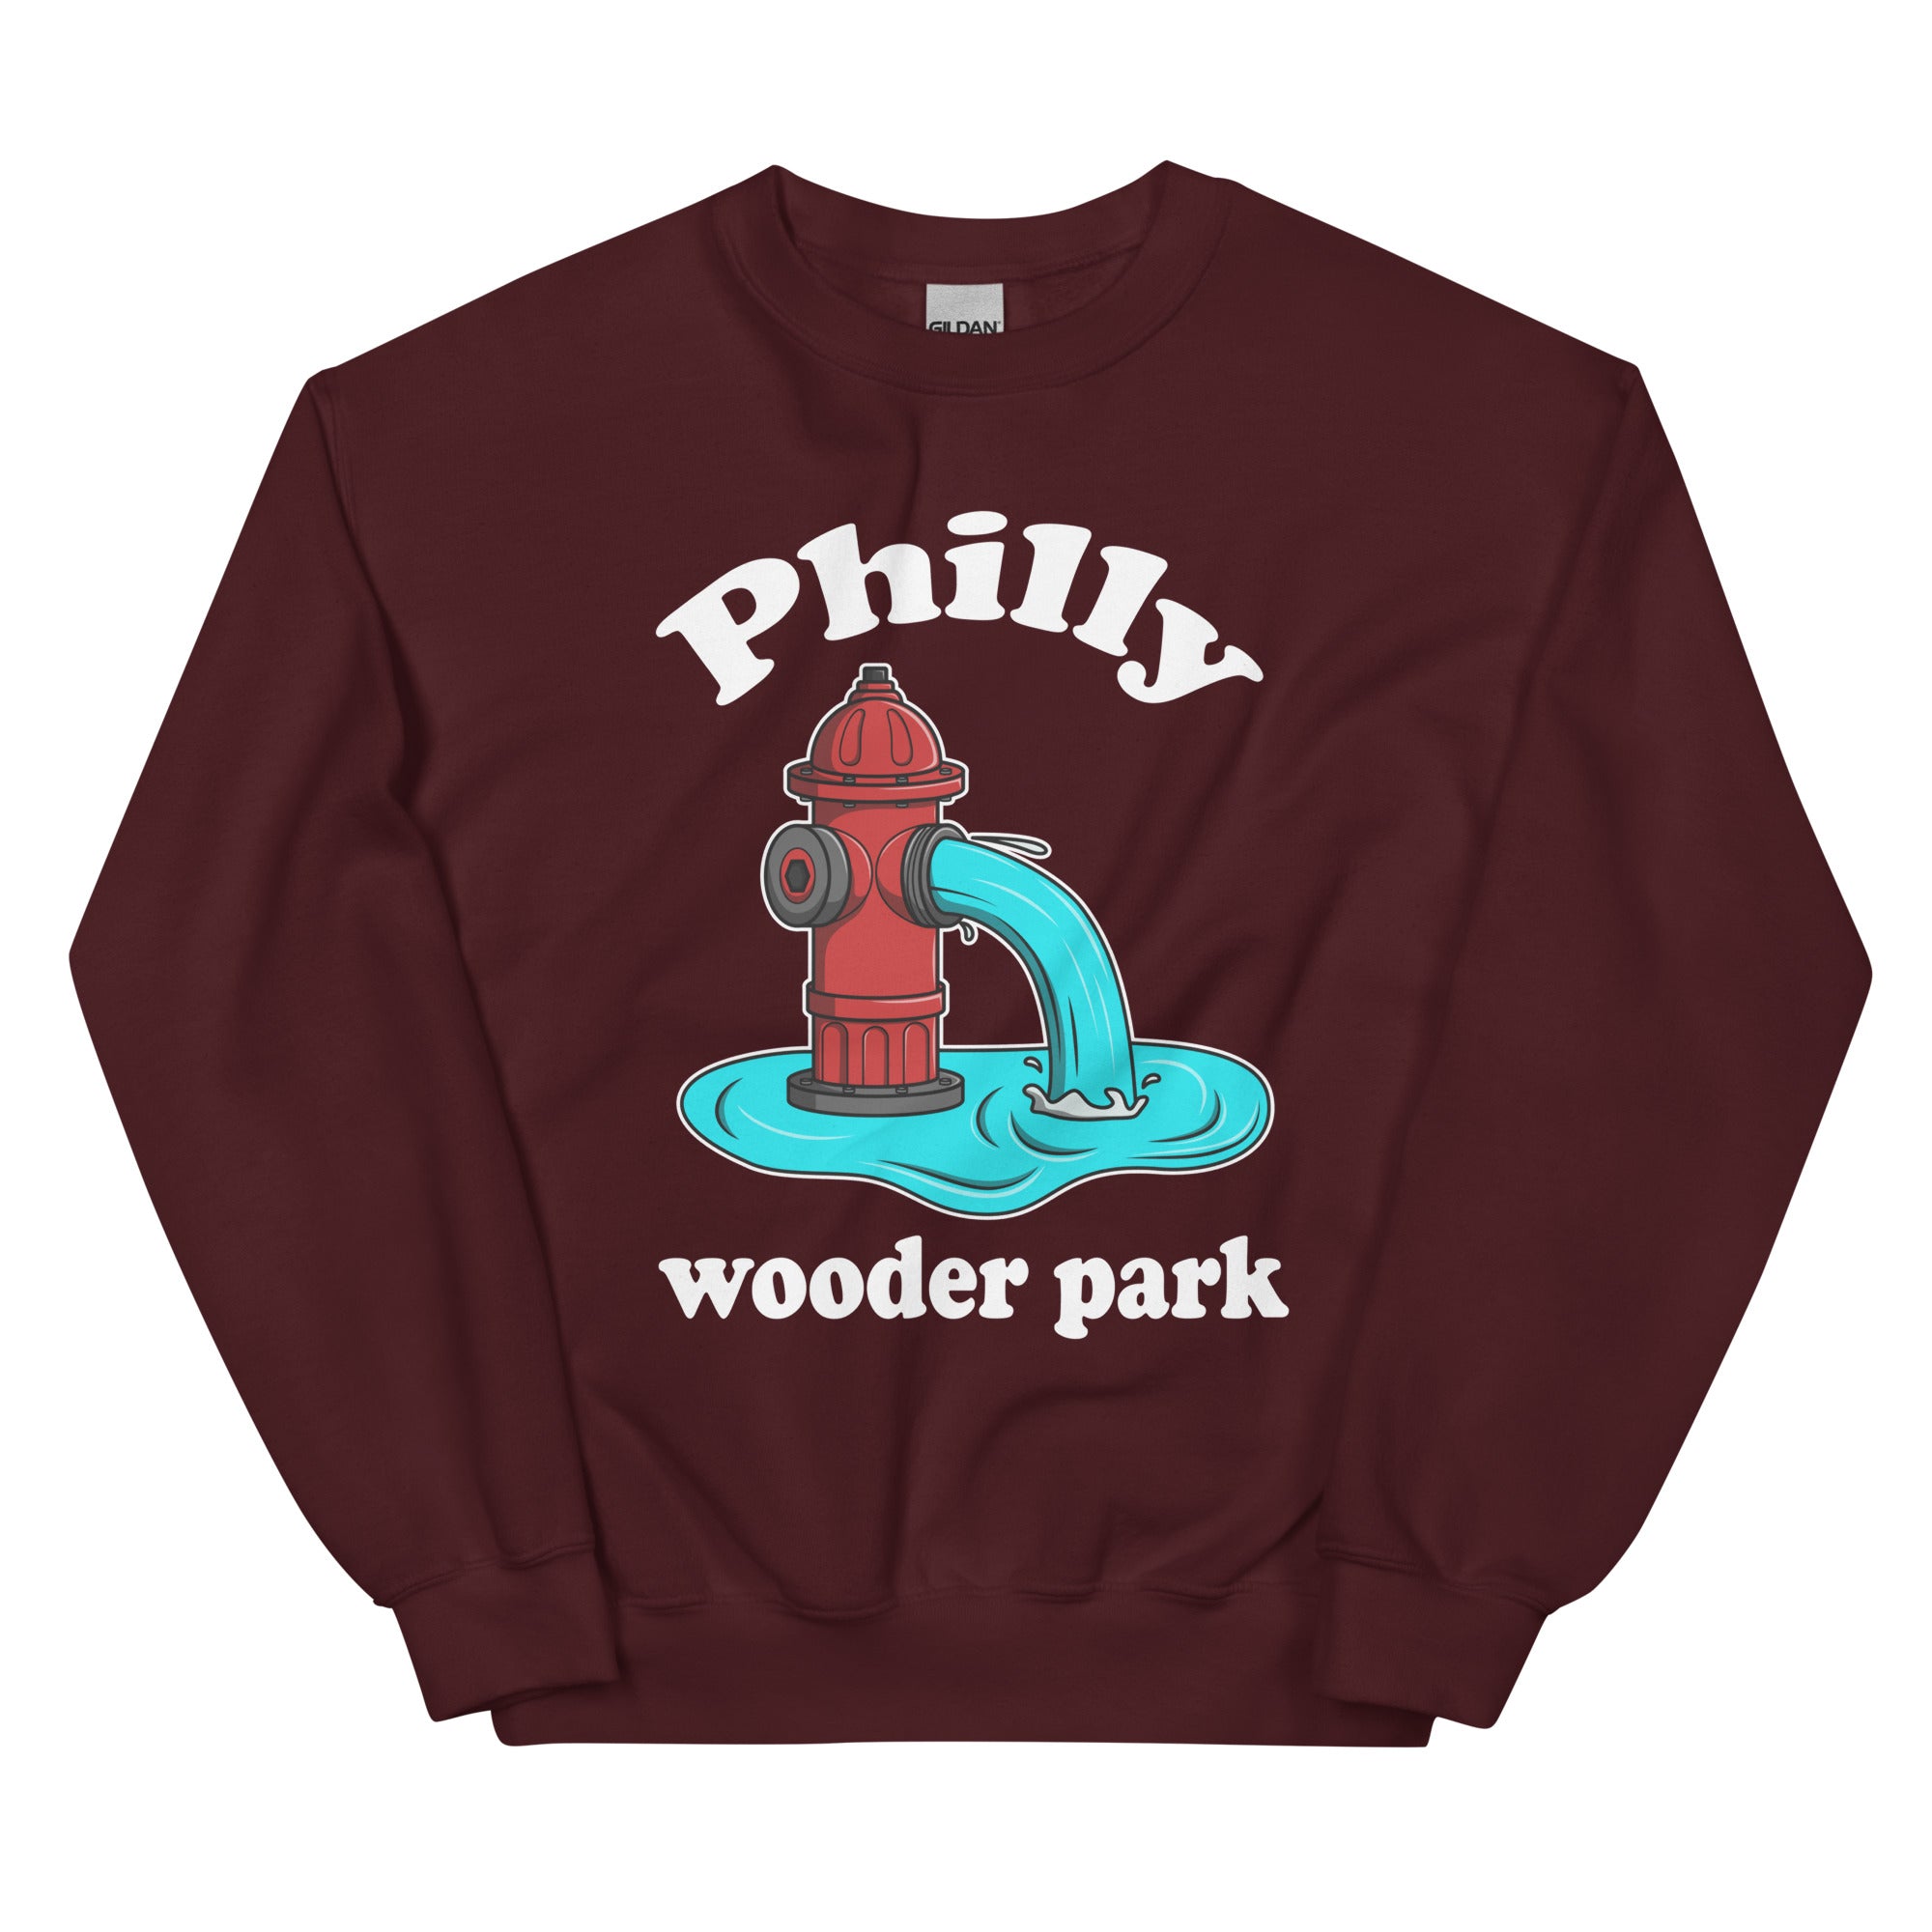 Philadelphia Philly wooder park fire hydrant funny maroon sweatshirt Phillygoat